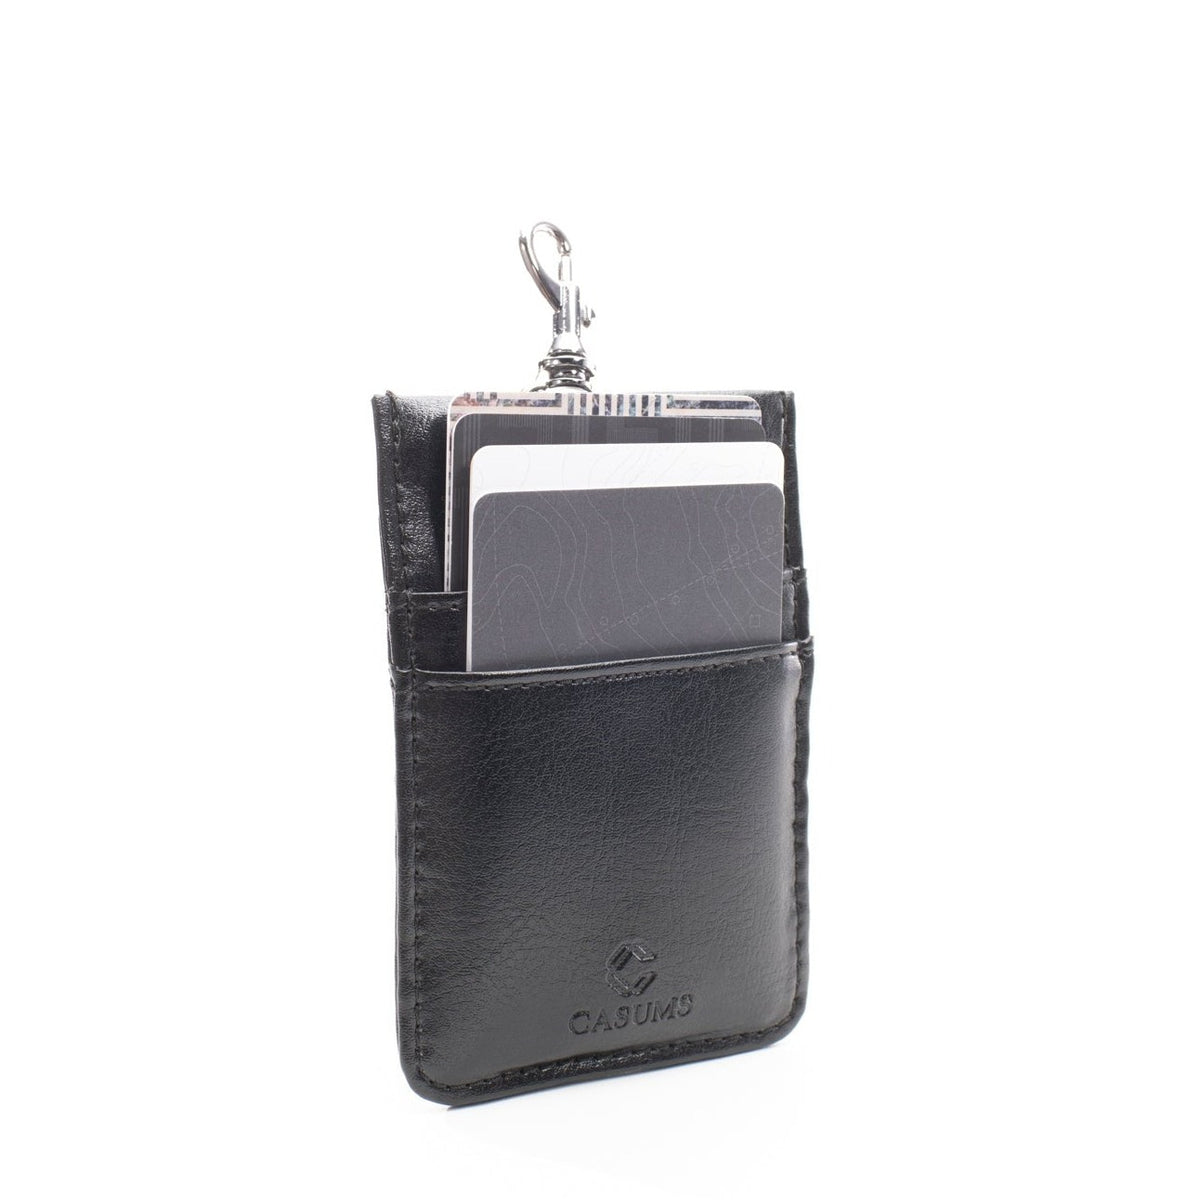 Card Case Wallet - Onyx (black) - Gunmetal Toned Hardware